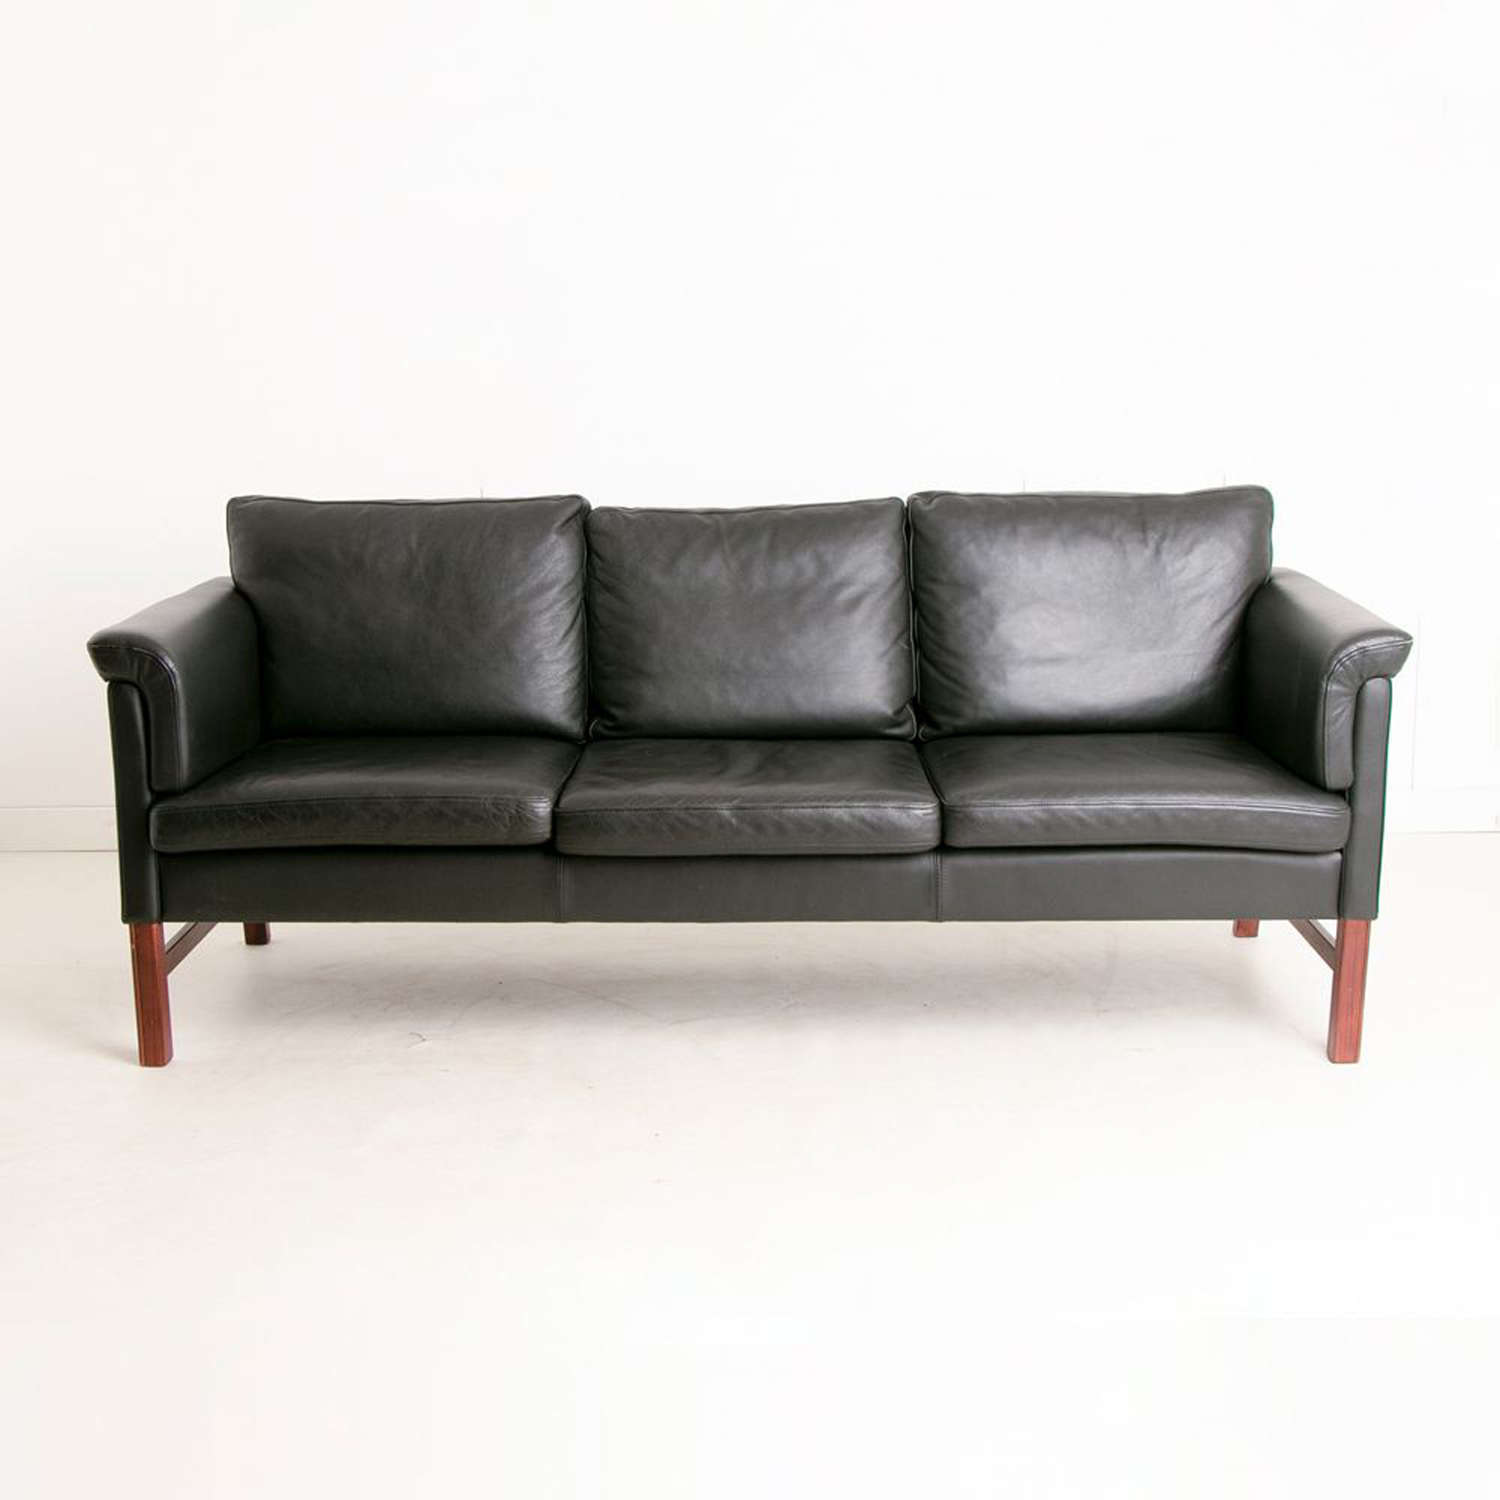 Danish black leather Midcentury Sofa